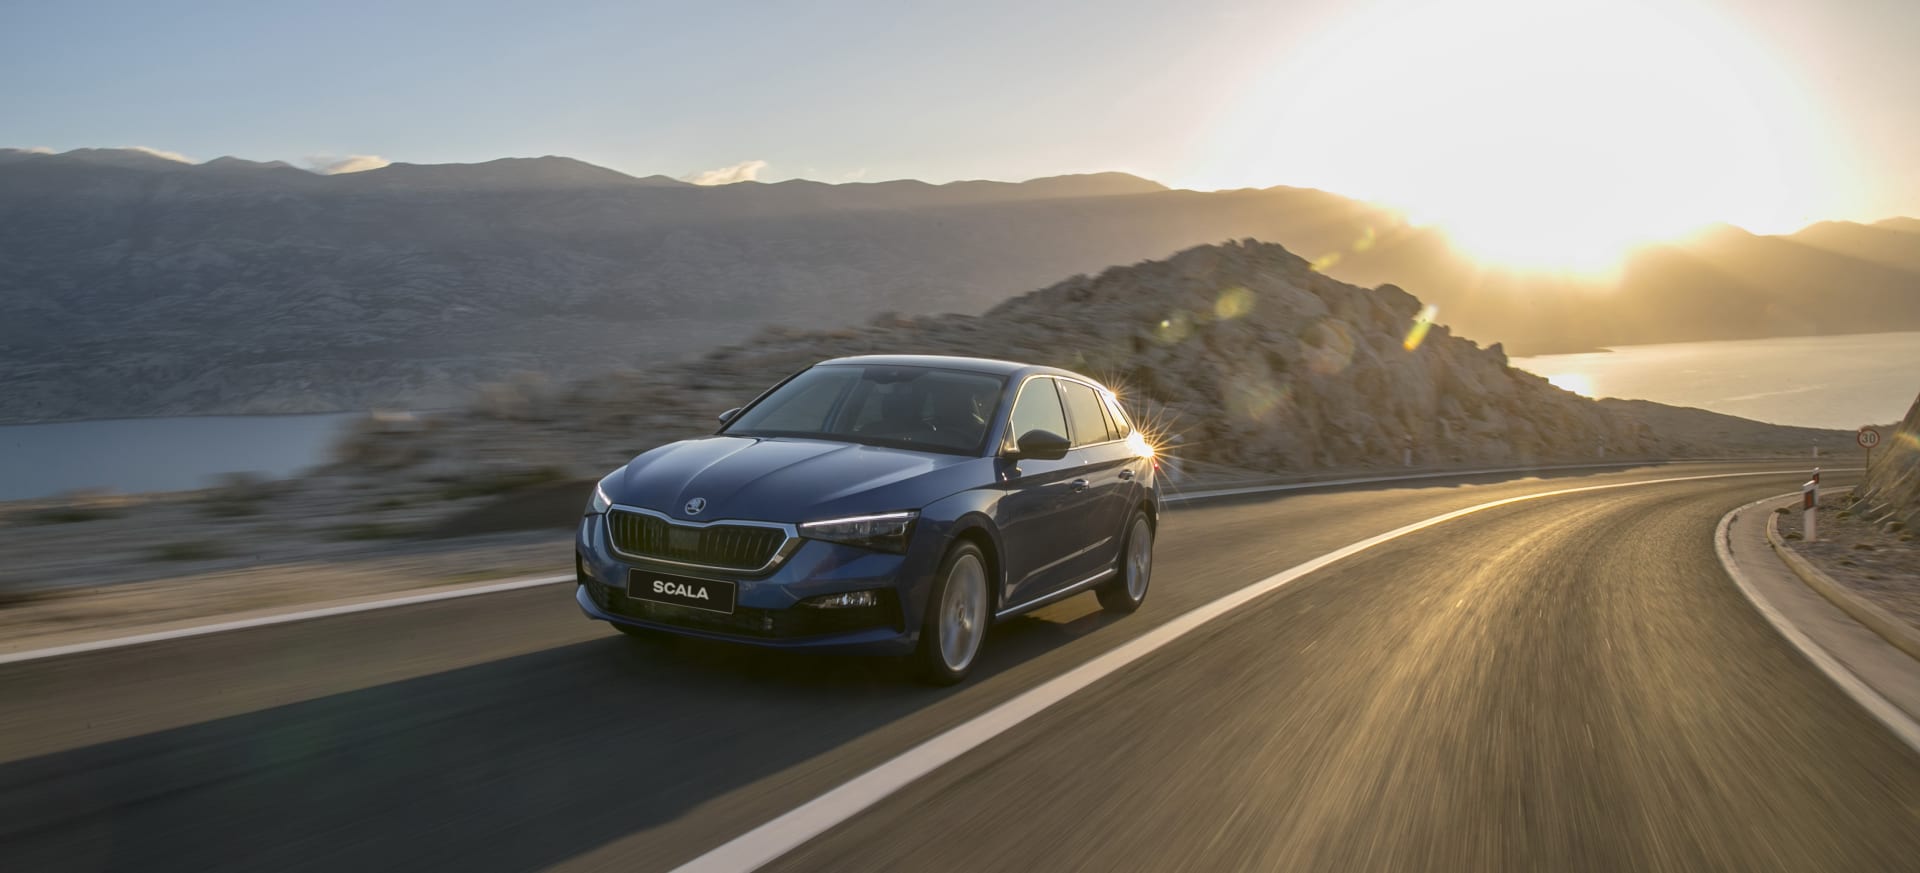 Discover the Award-Winning Škoda Range